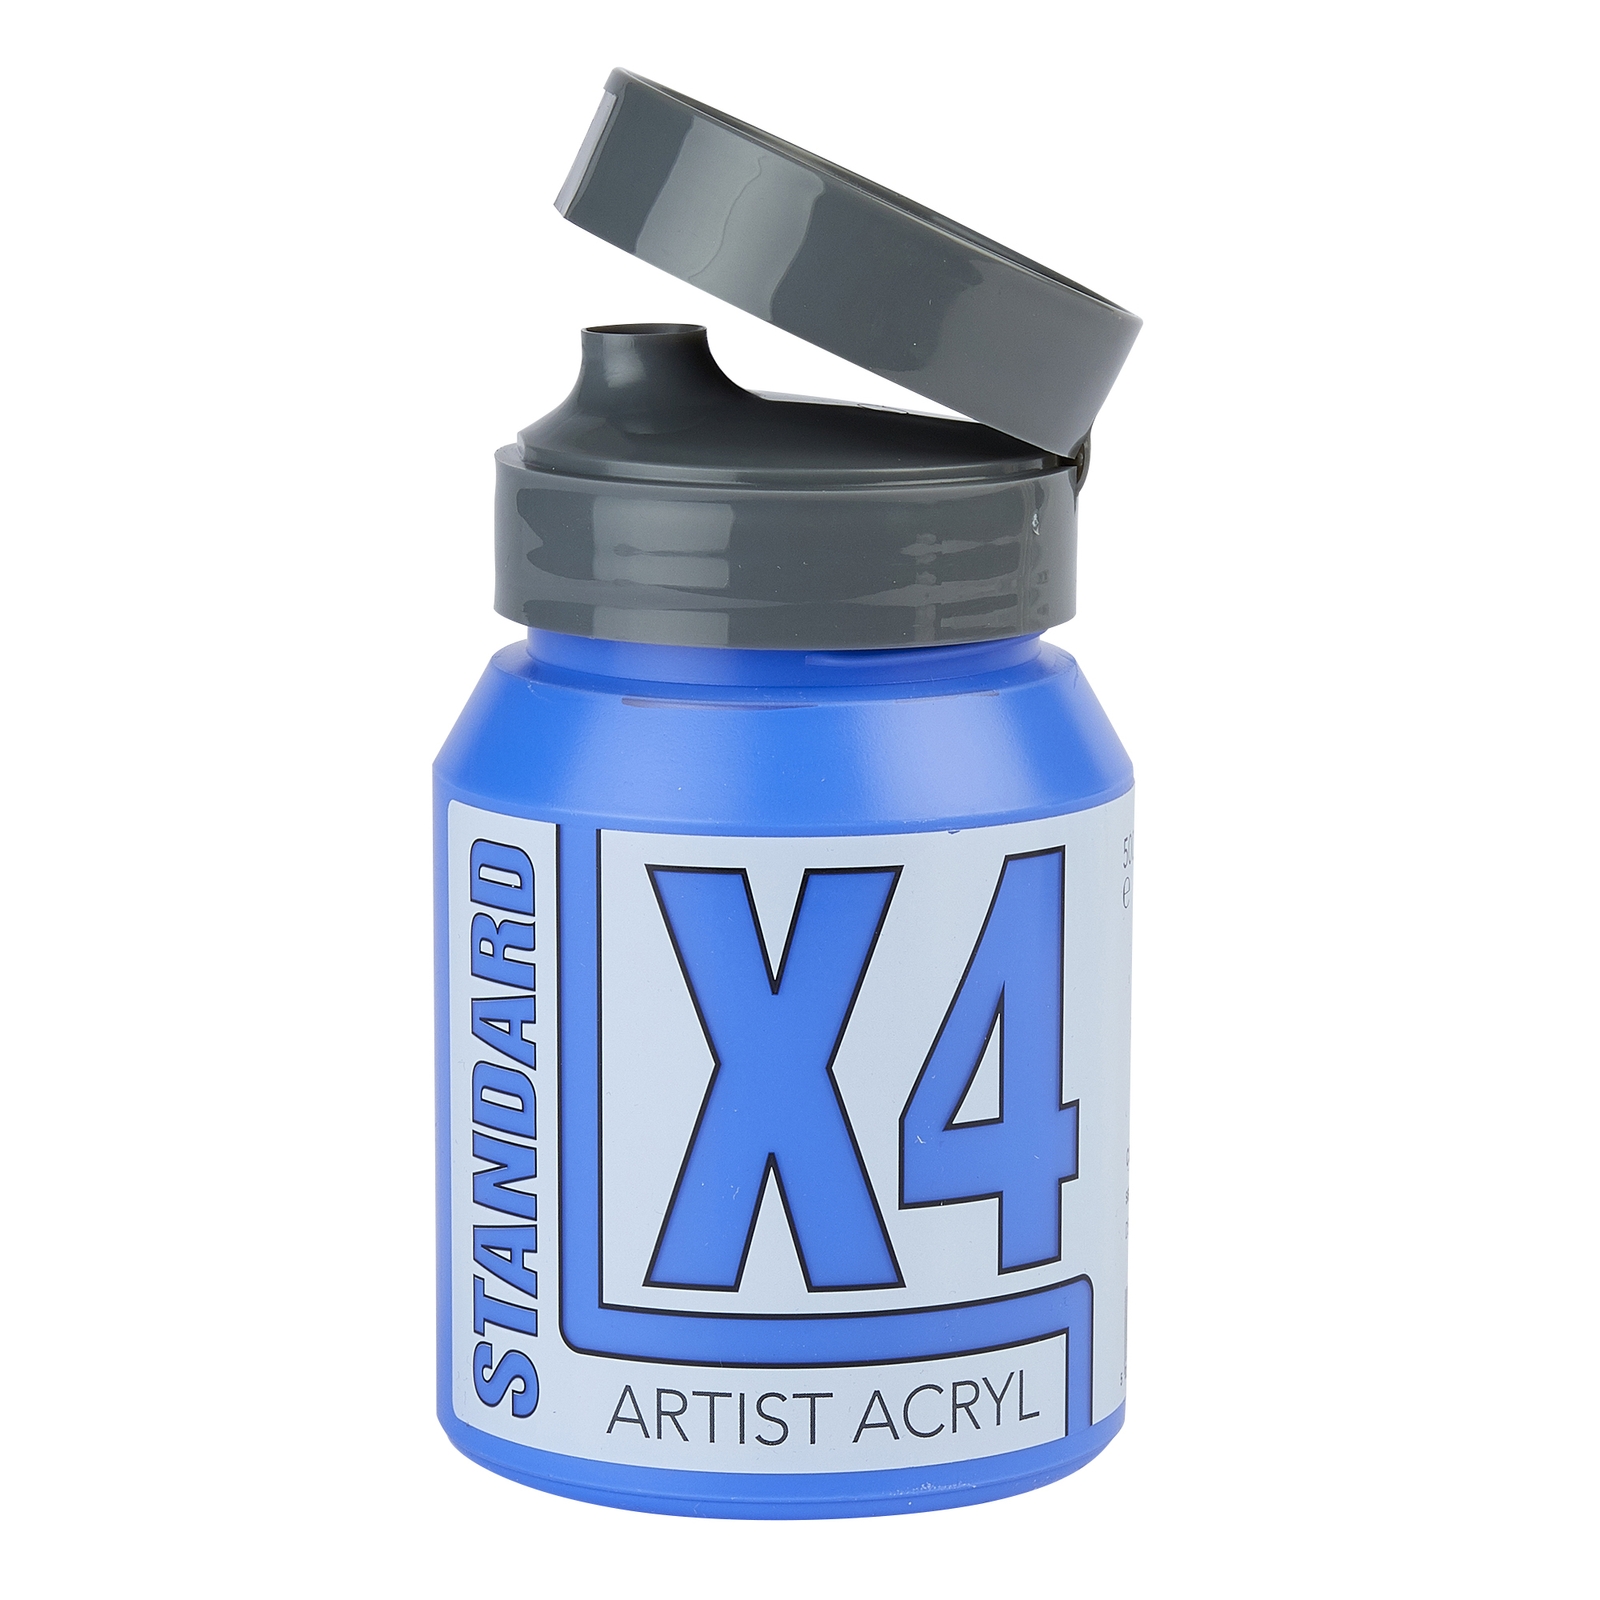 Specialist Crafts X4 Standard Cobalt Blue Acryl/Acrylic Paint - 500ml - Each